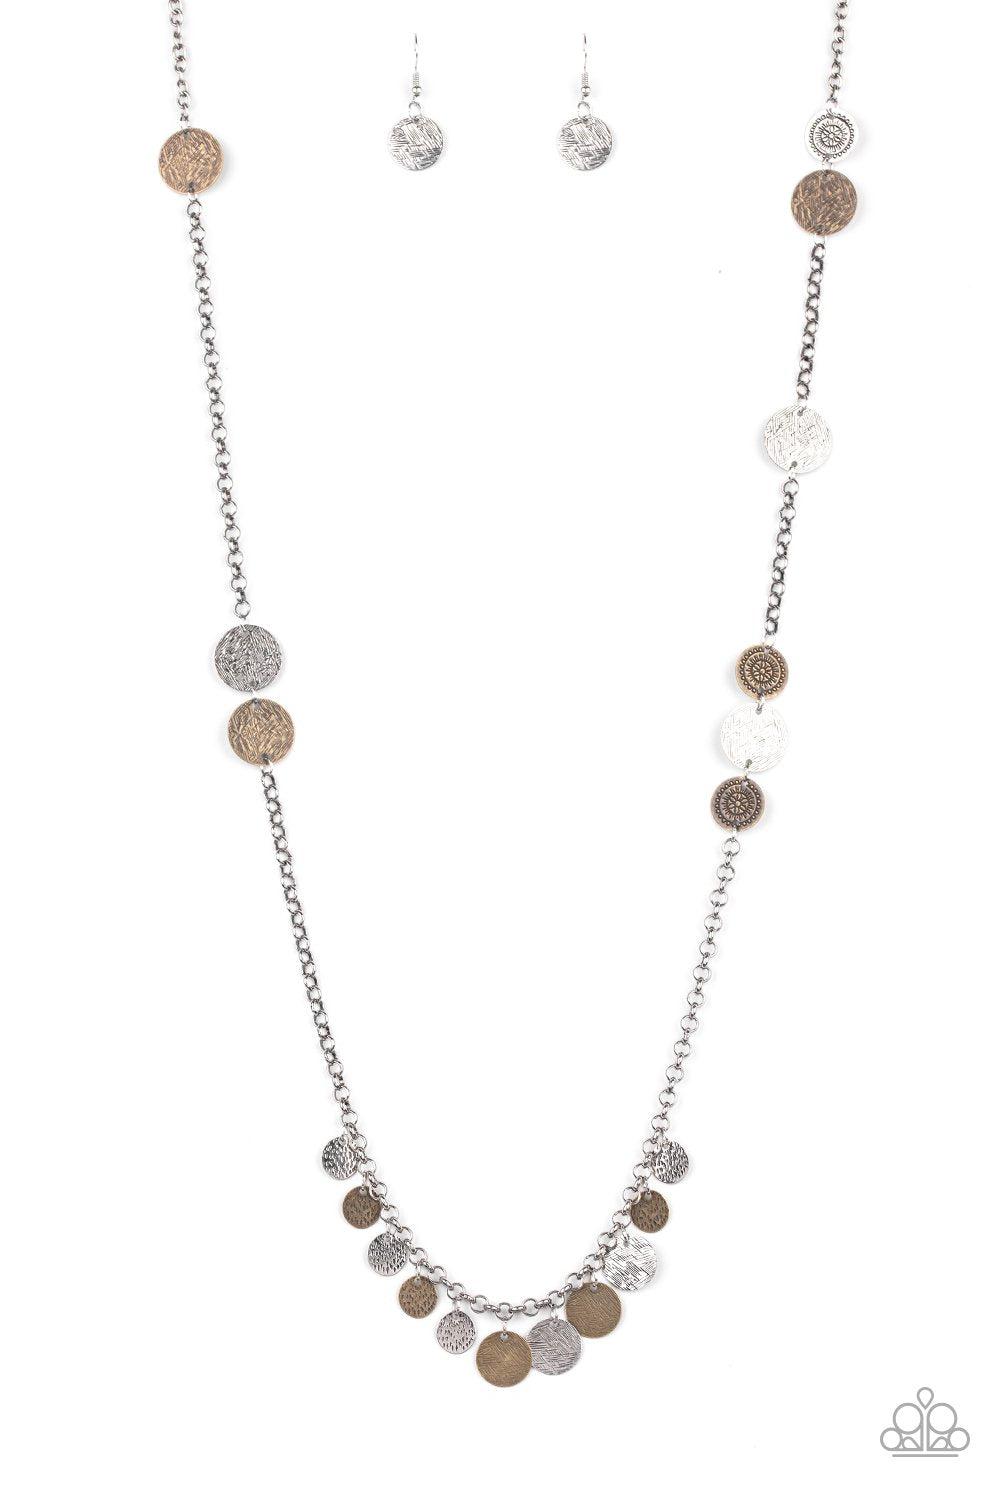 Trailblazing Trinket Multi Silver and Brass Necklace - Paparazzi Accessories - lightbox -CarasShop.com - $5 Jewelry by Cara Jewels